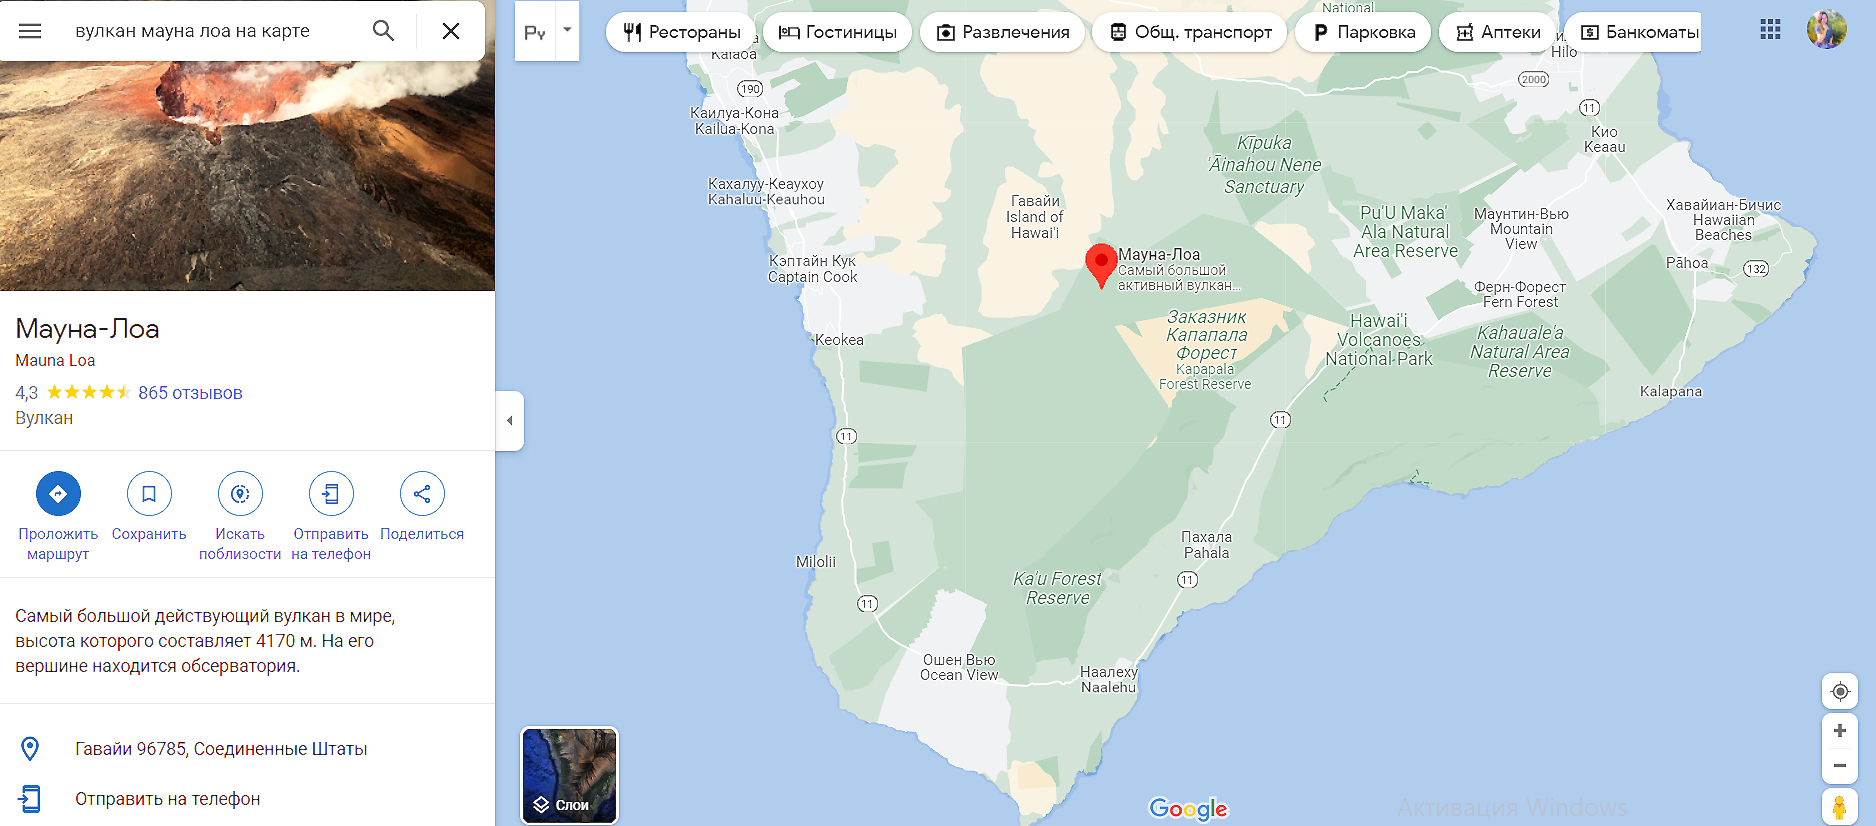 Мауна лоа на карте. Мауна-Лоа вулкан на карте. Землетрясение Мауна-Лоа. Где находится Мауна Лоа на карте.